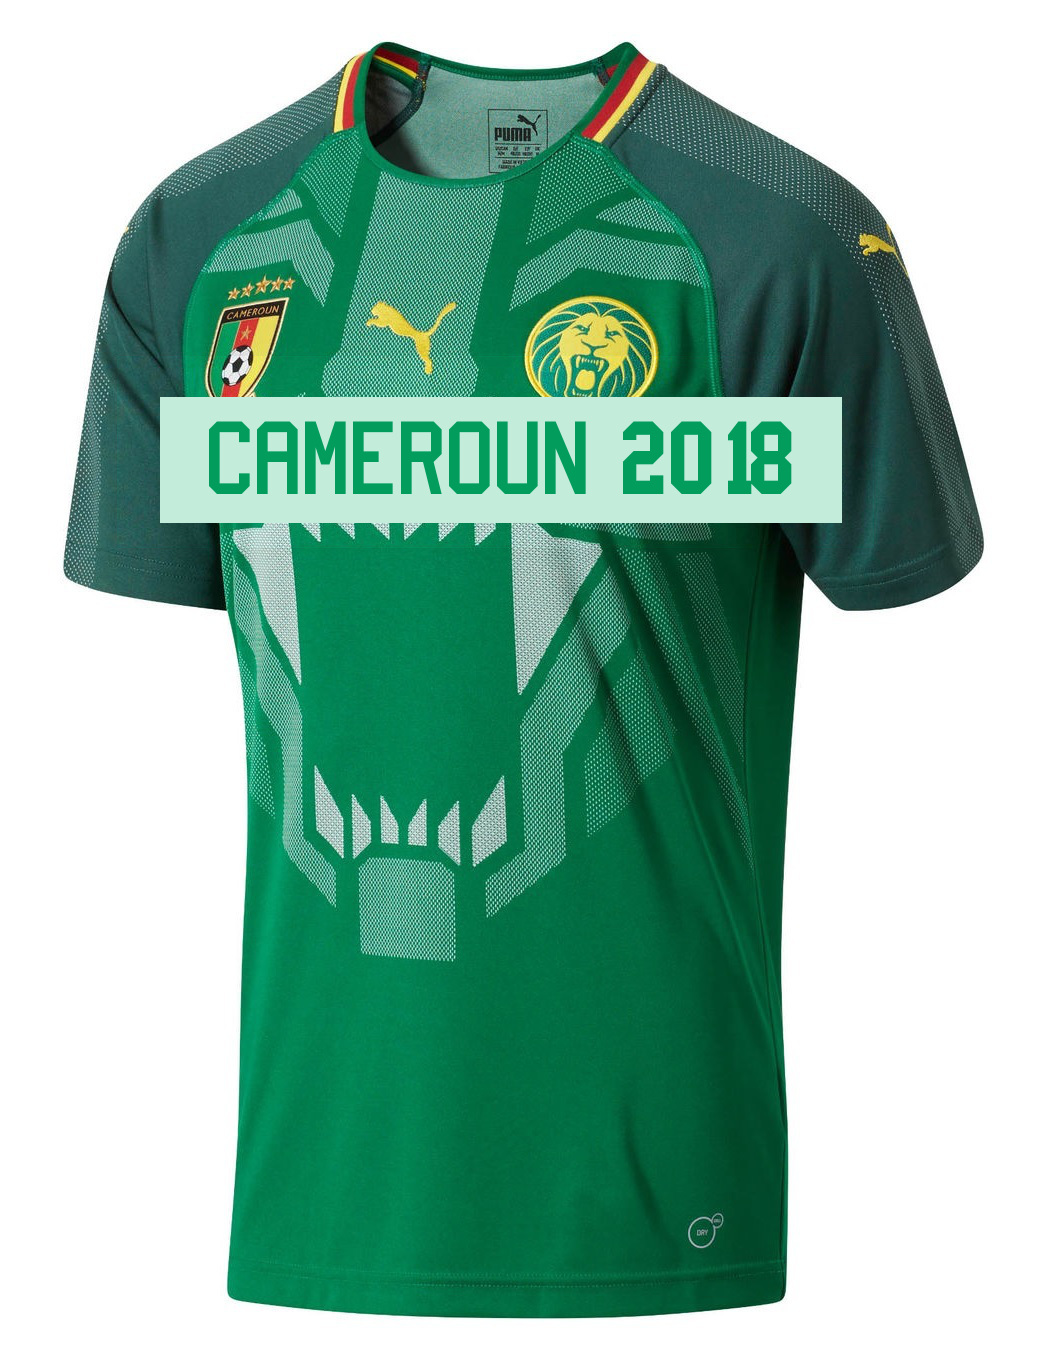 Cameroun 2018 maillot domicile football